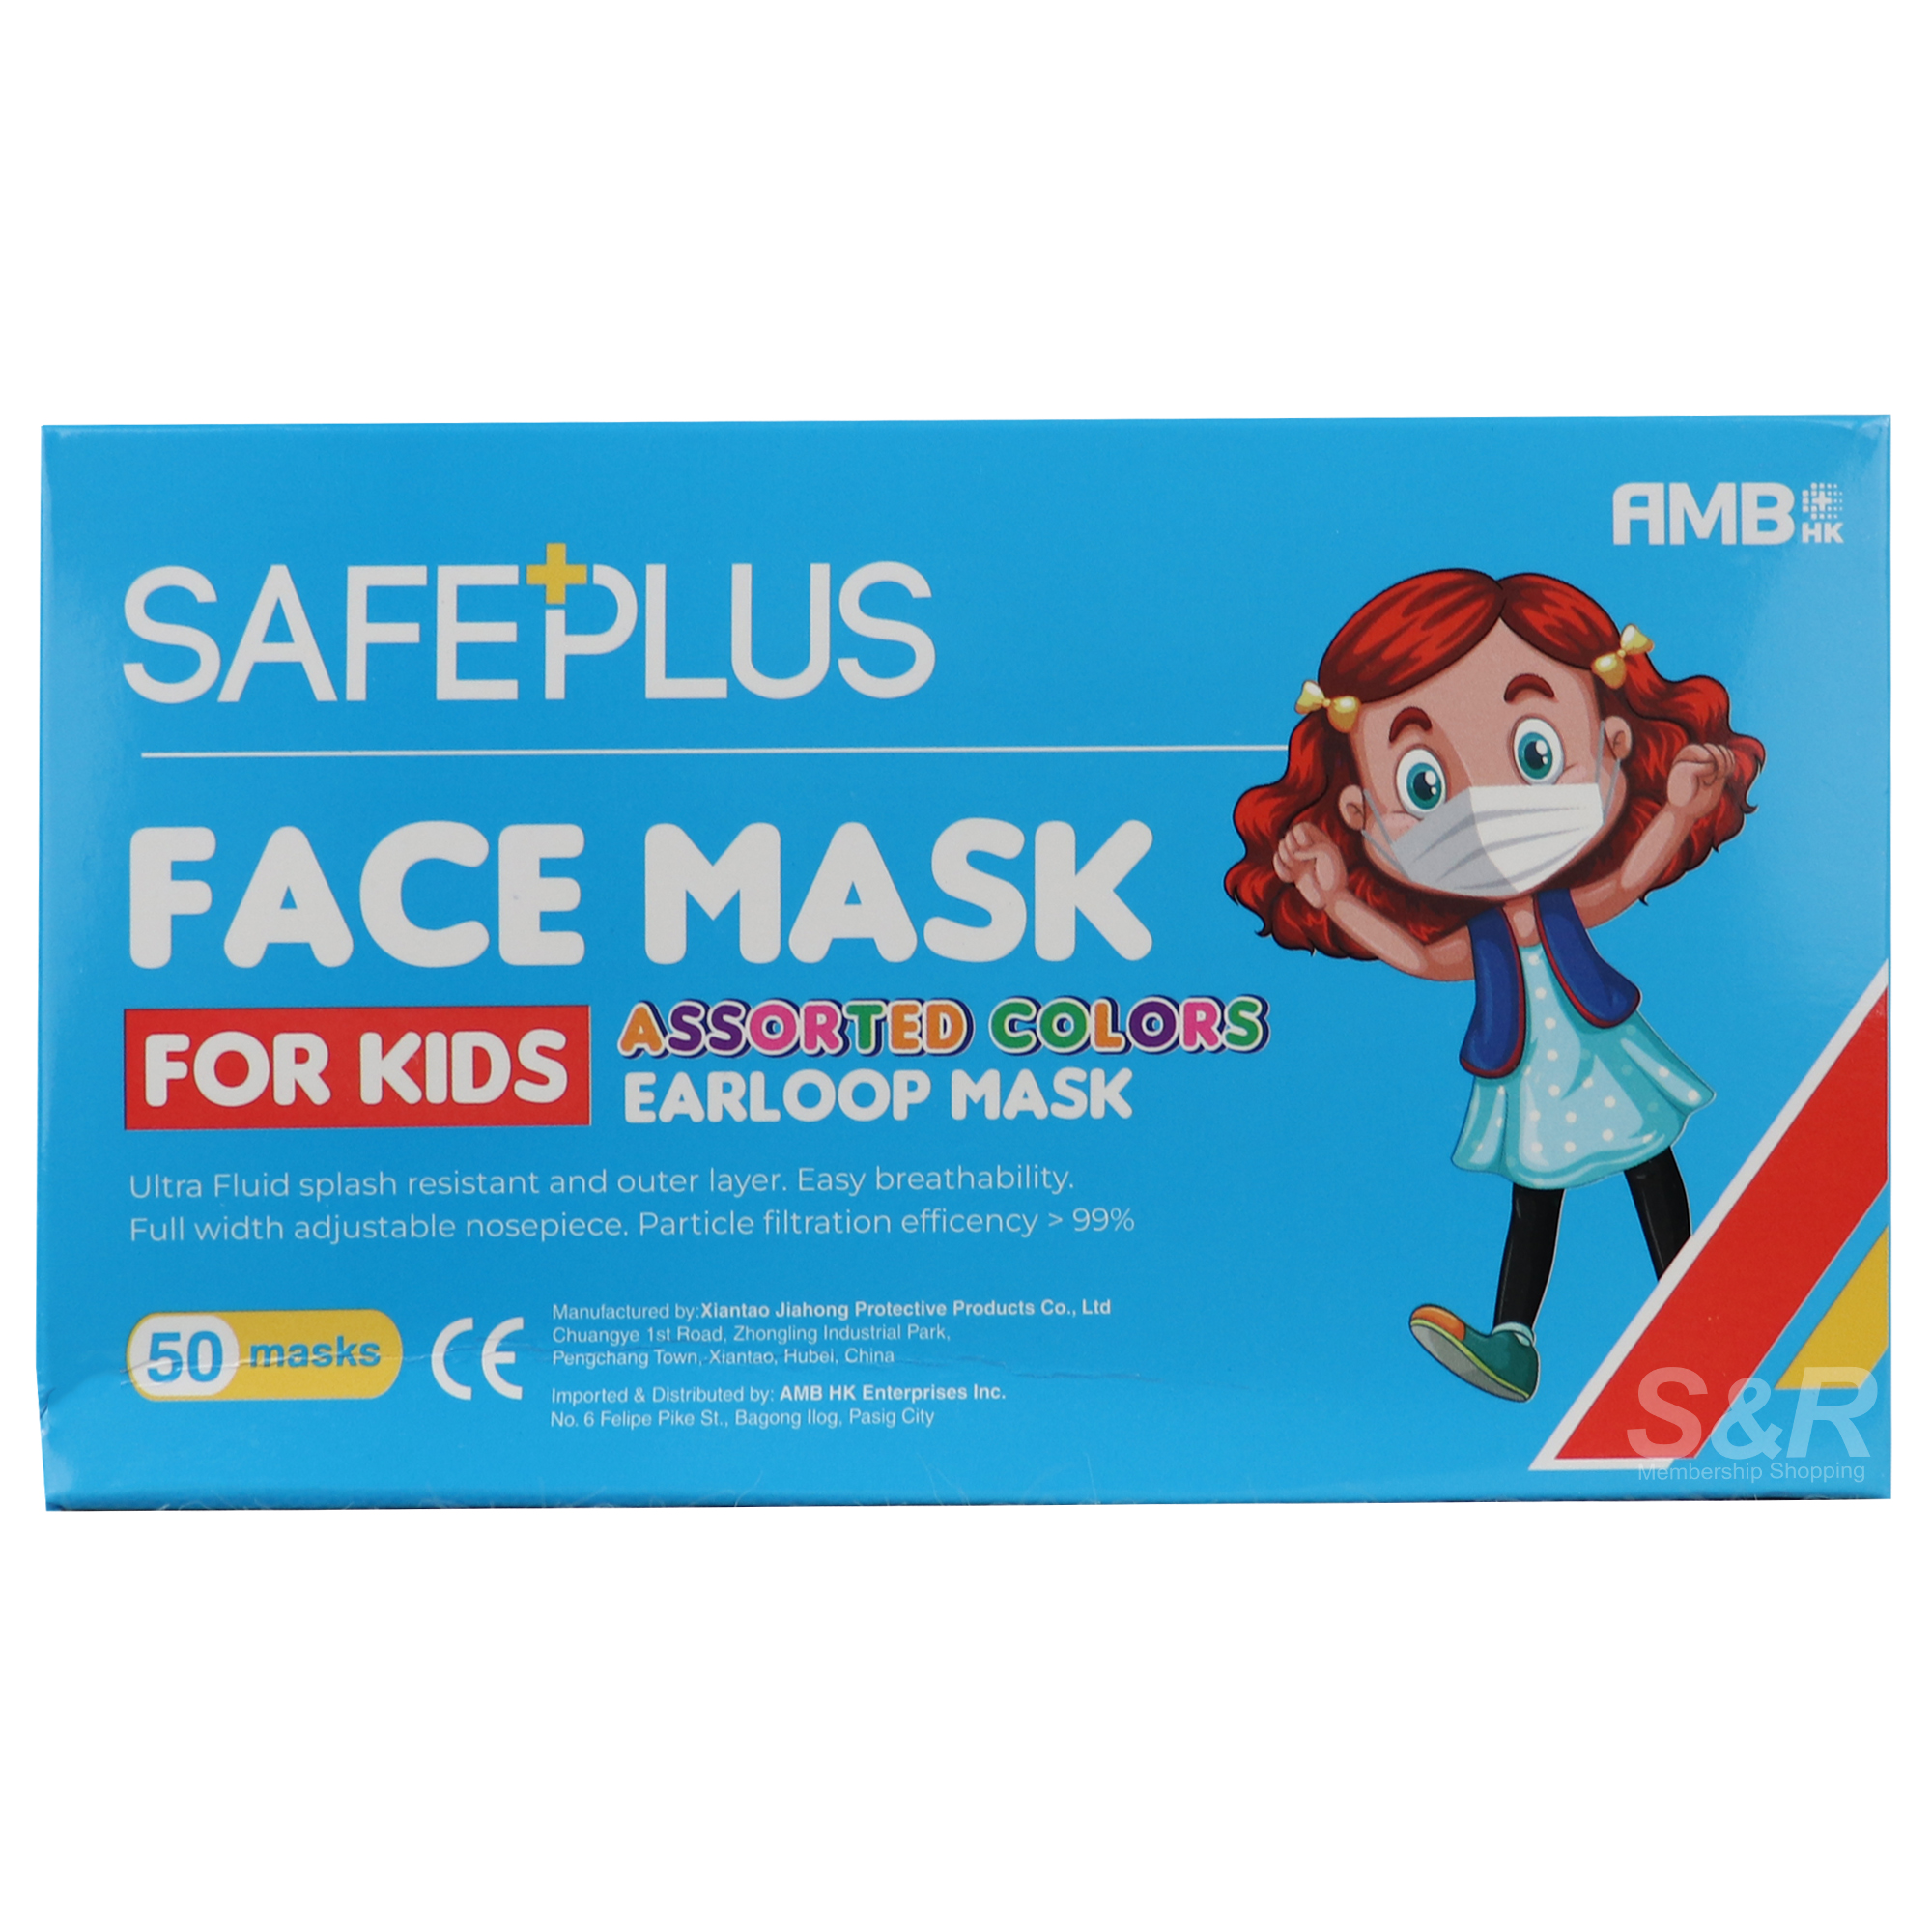 Safe Plus Earloop Face Mask for Kids assorted Colors 50pcs